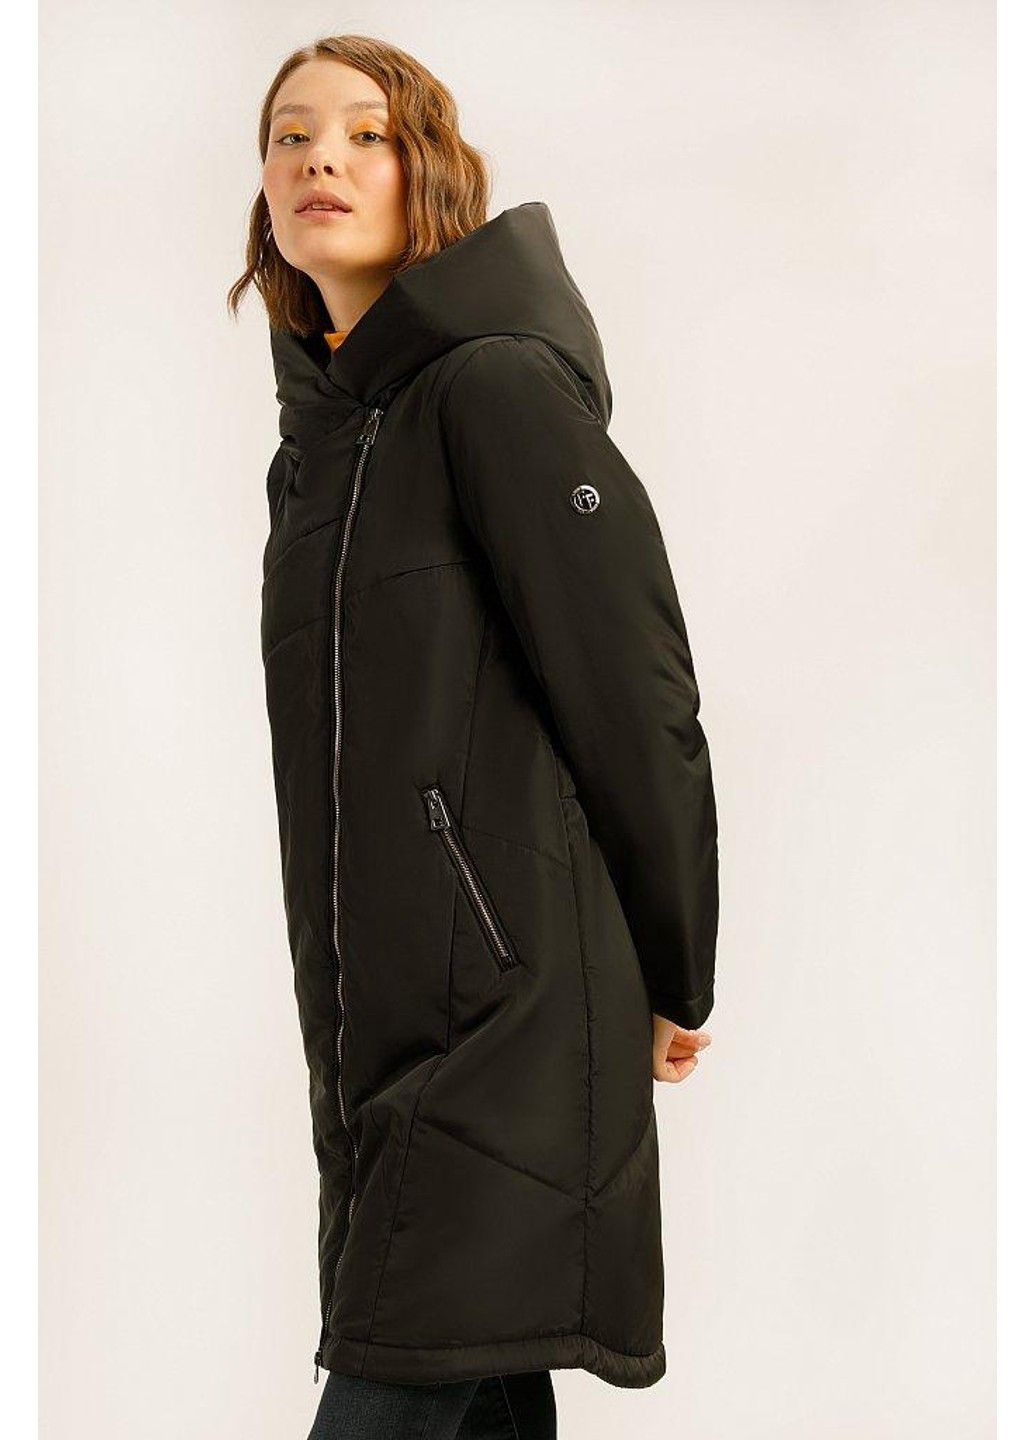 Черная демисезонная куртка a19-11019-200 Finn Flare